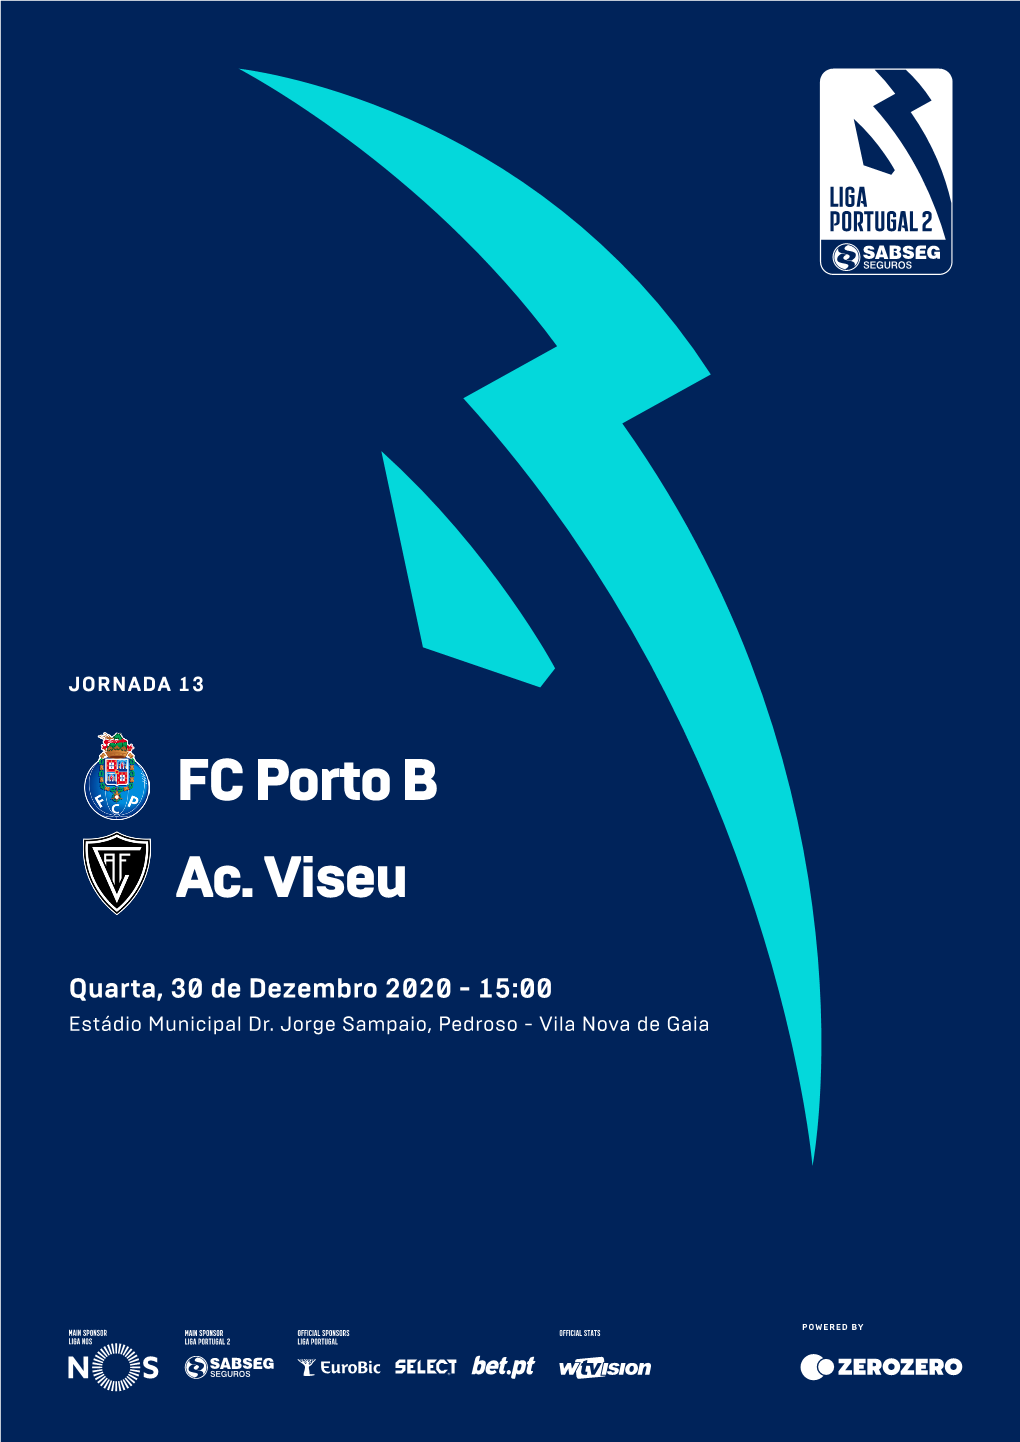 FC Porto B Ac. Viseu